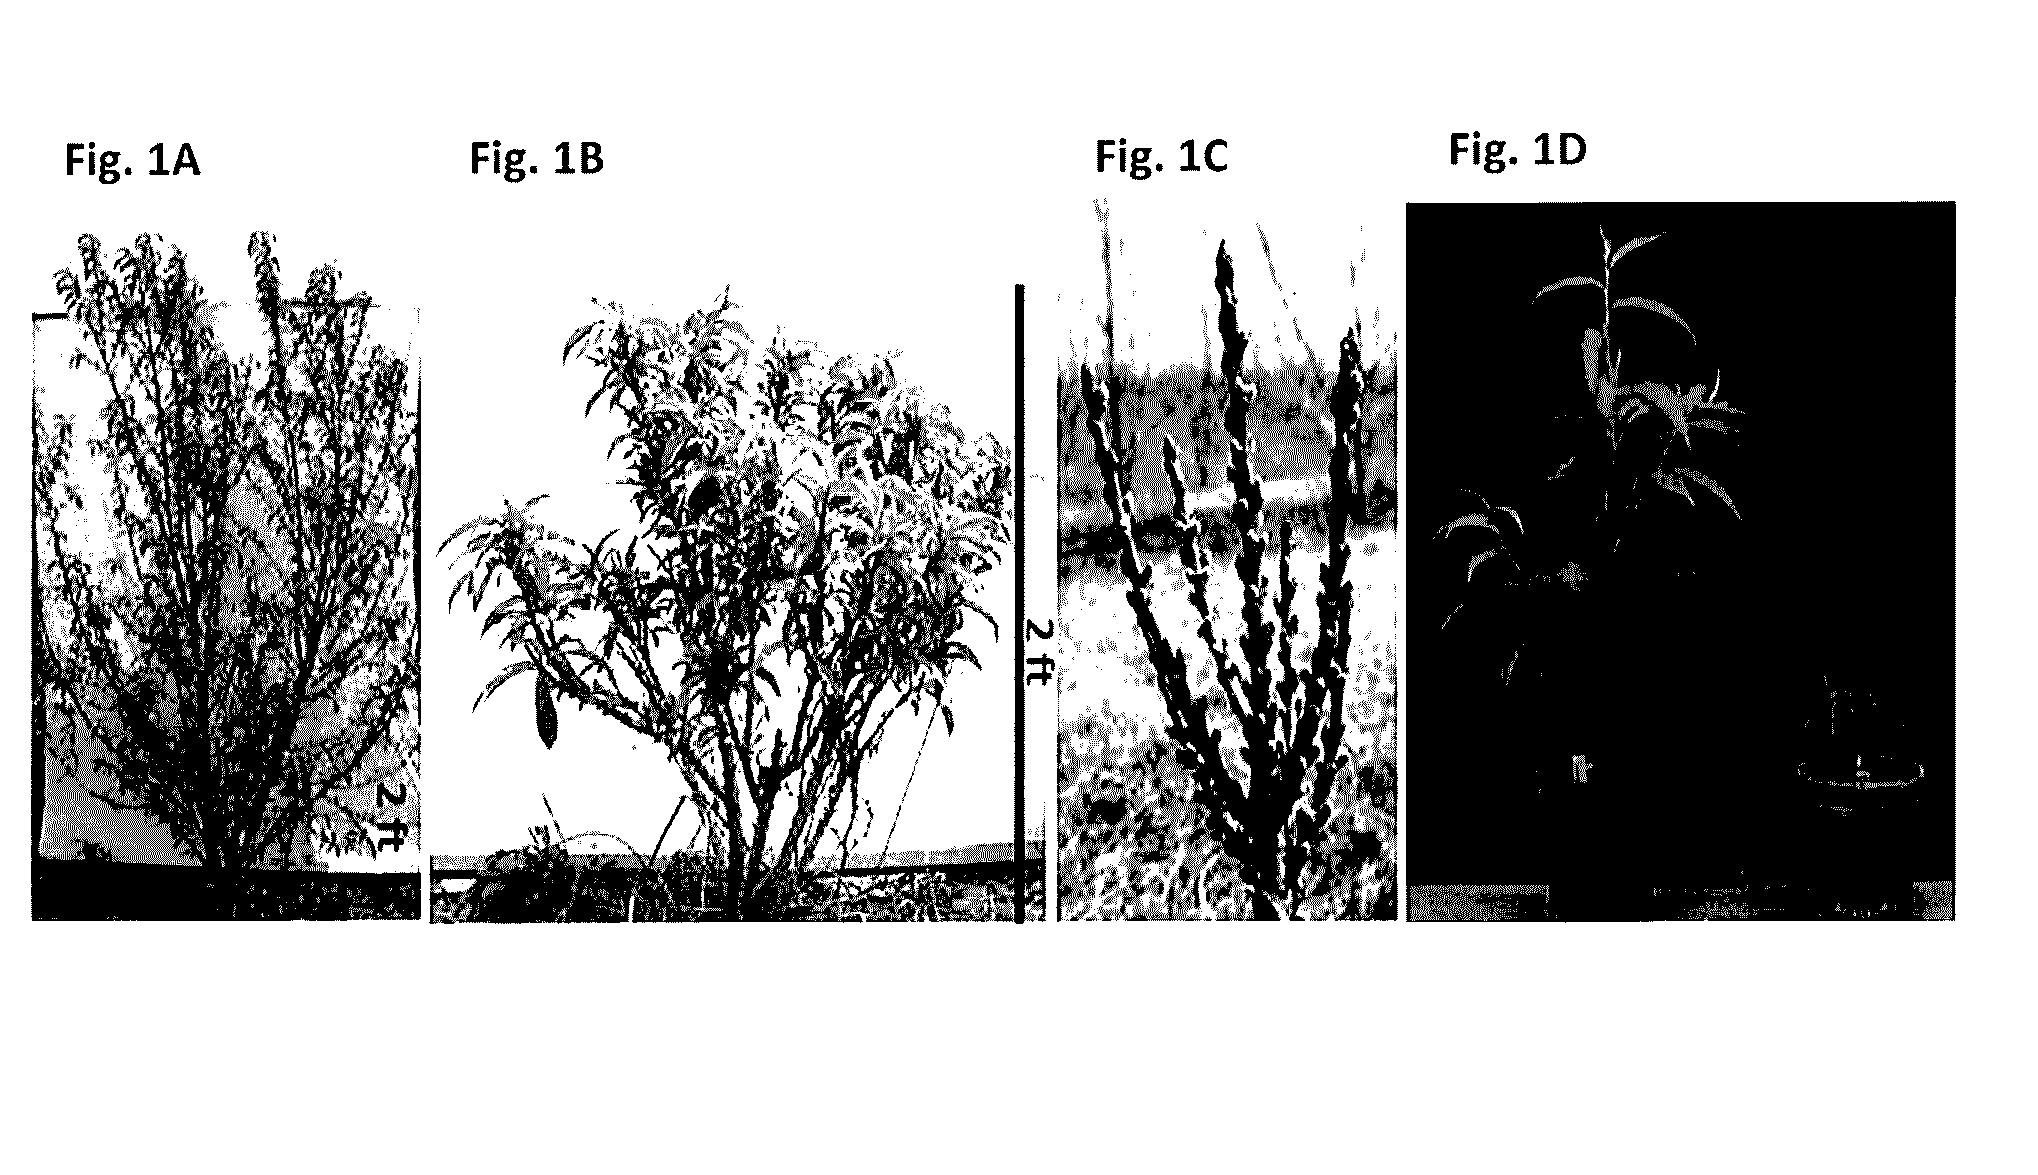 Effect of PpeGID1c on Vegetative Growth of Fruit Trees